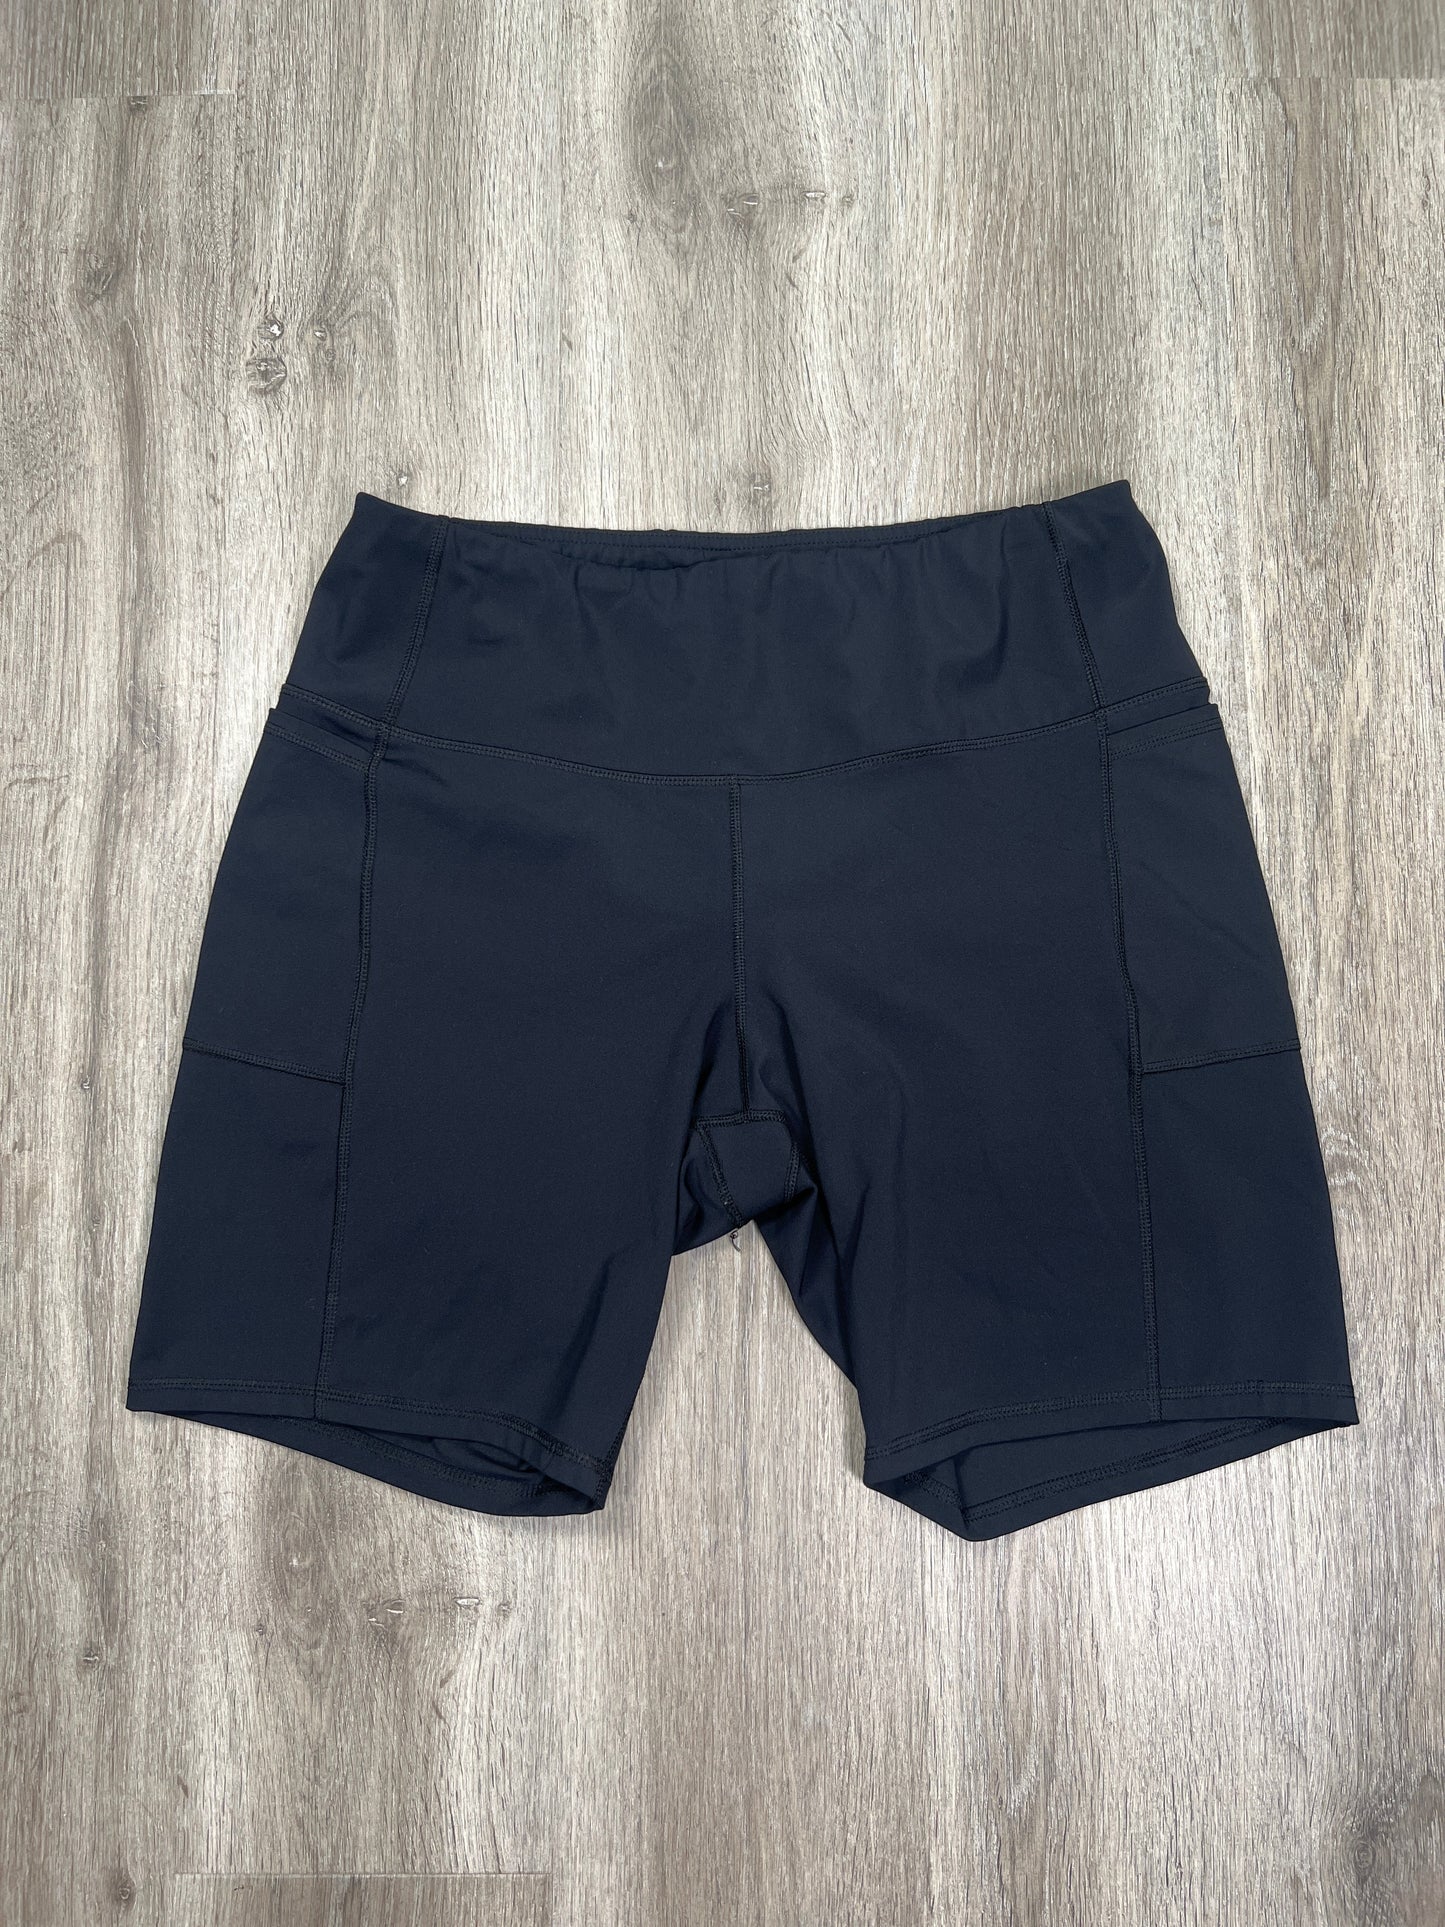 Black Athletic Shorts Rbx, Size 2x